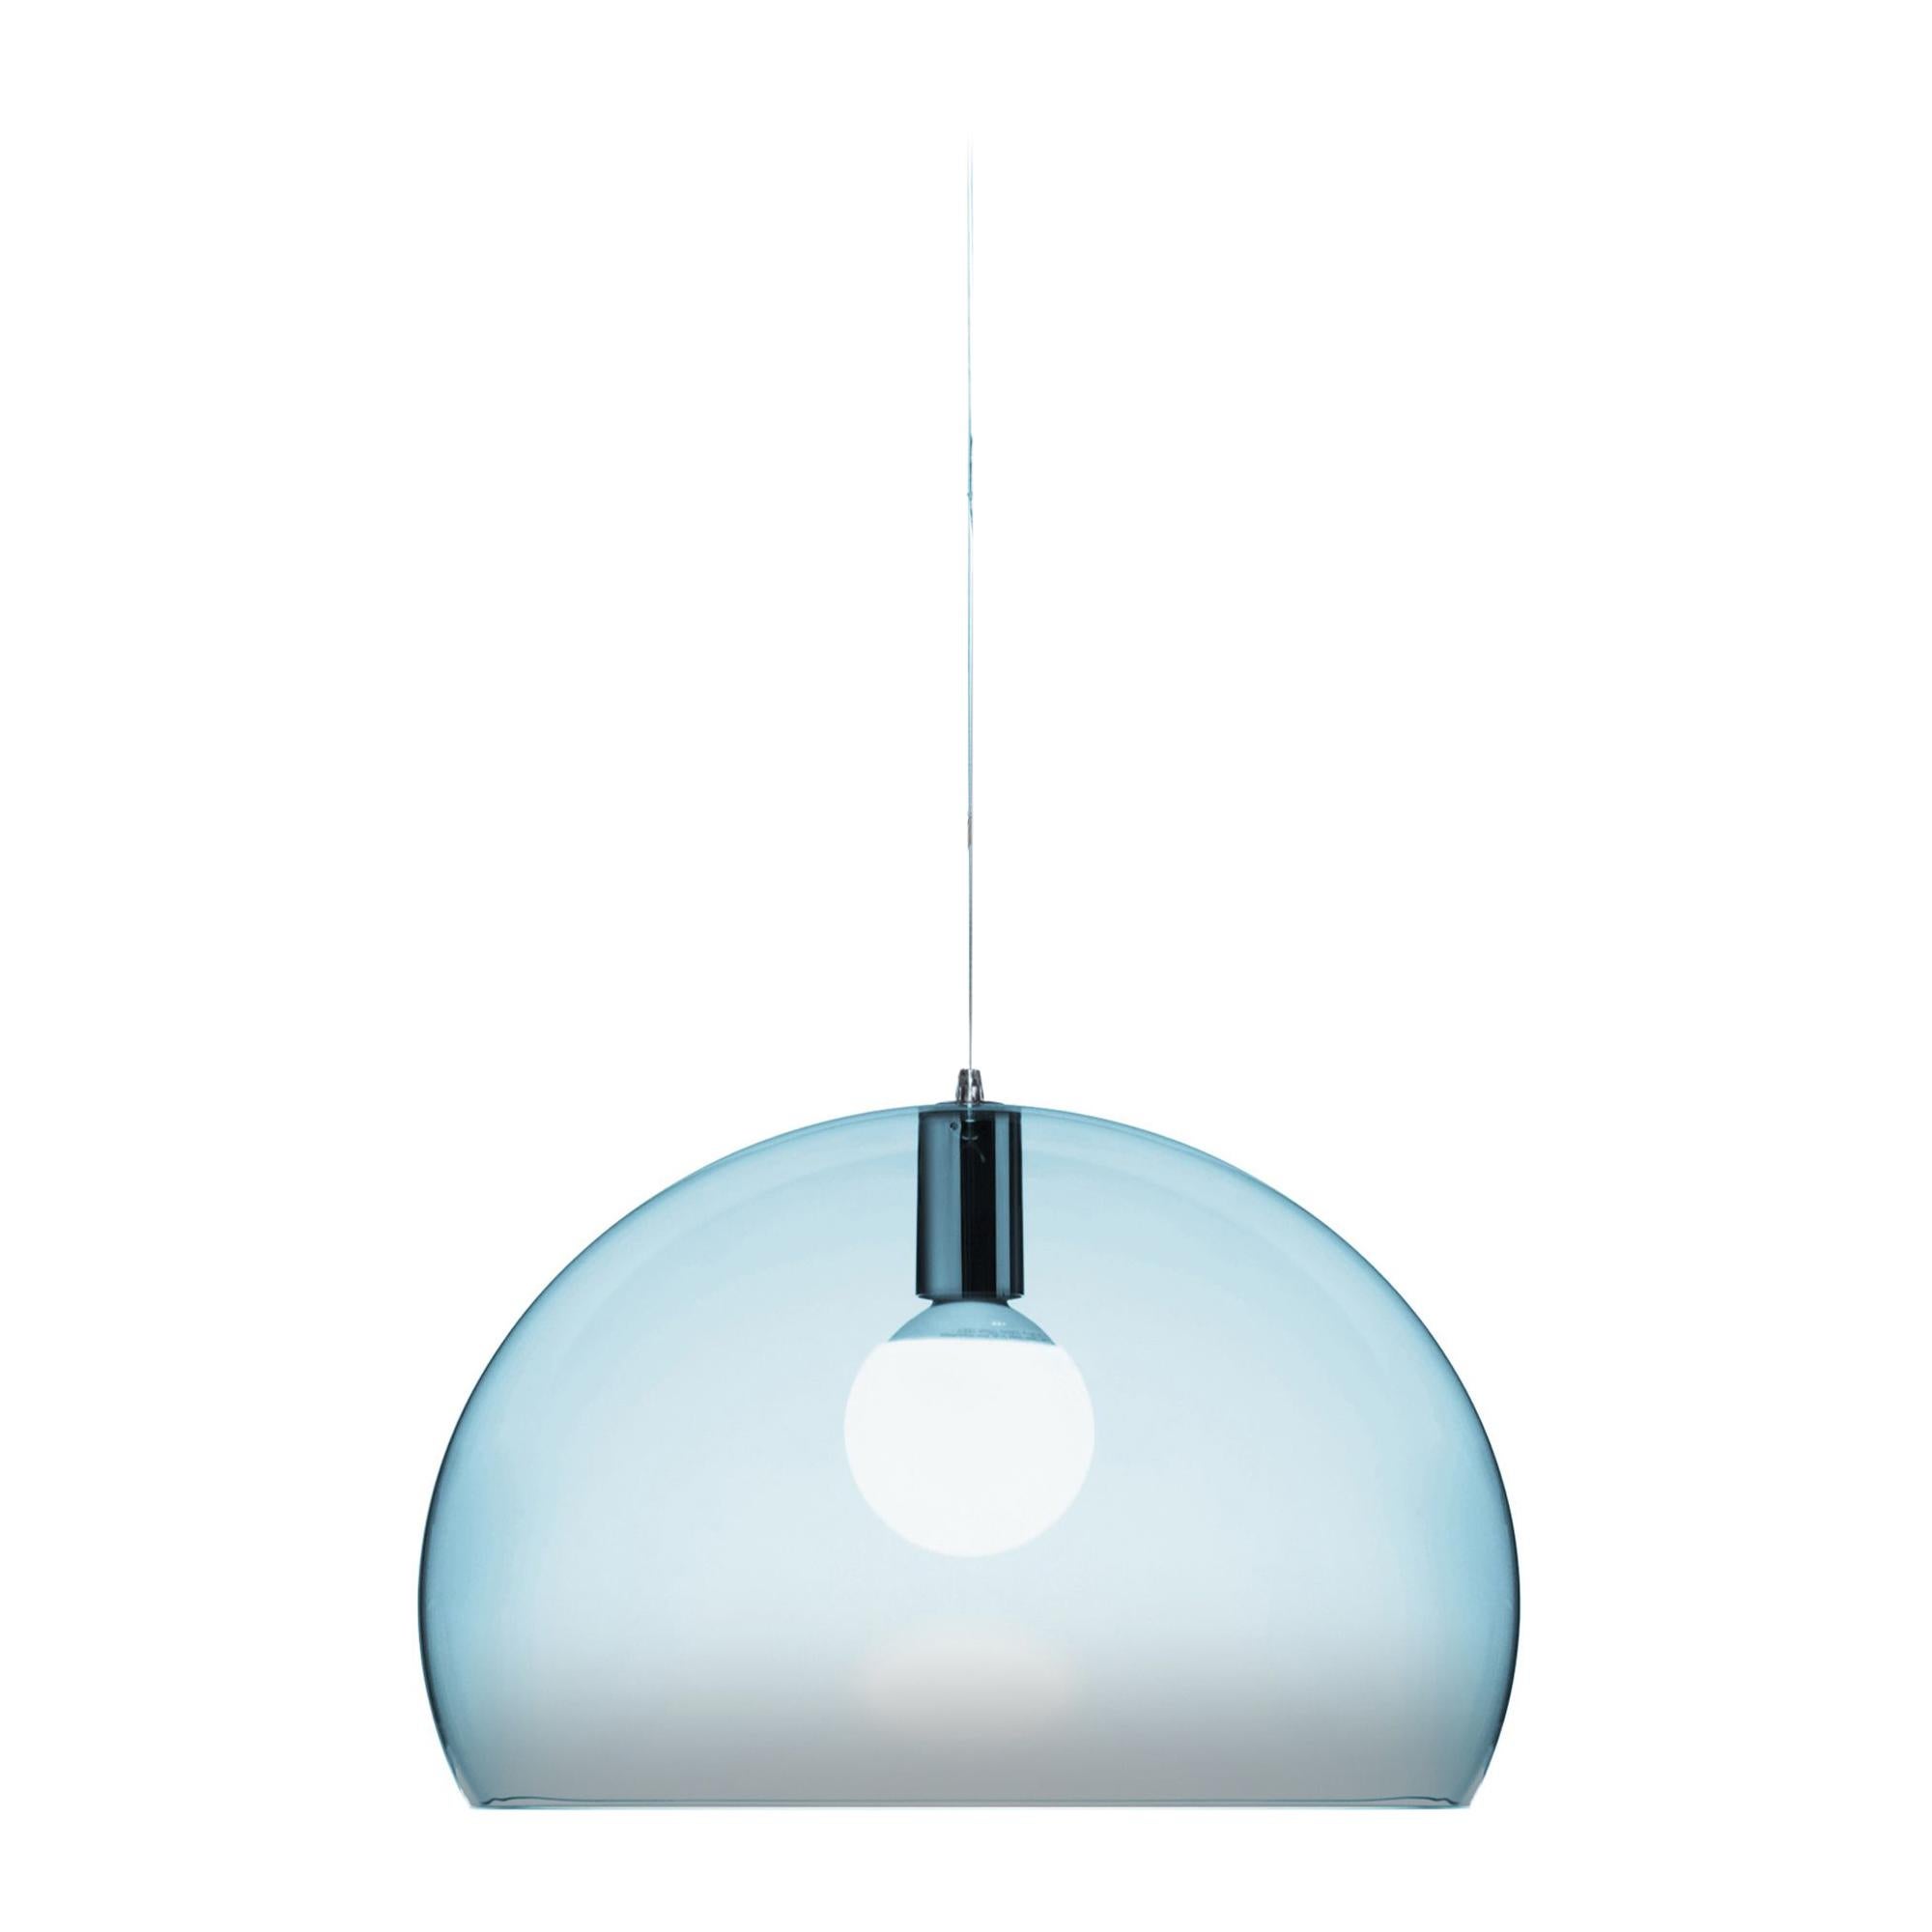 Petite lampe à suspension Kartell FL/Y bleu ciel, design Ferruccio Laviani